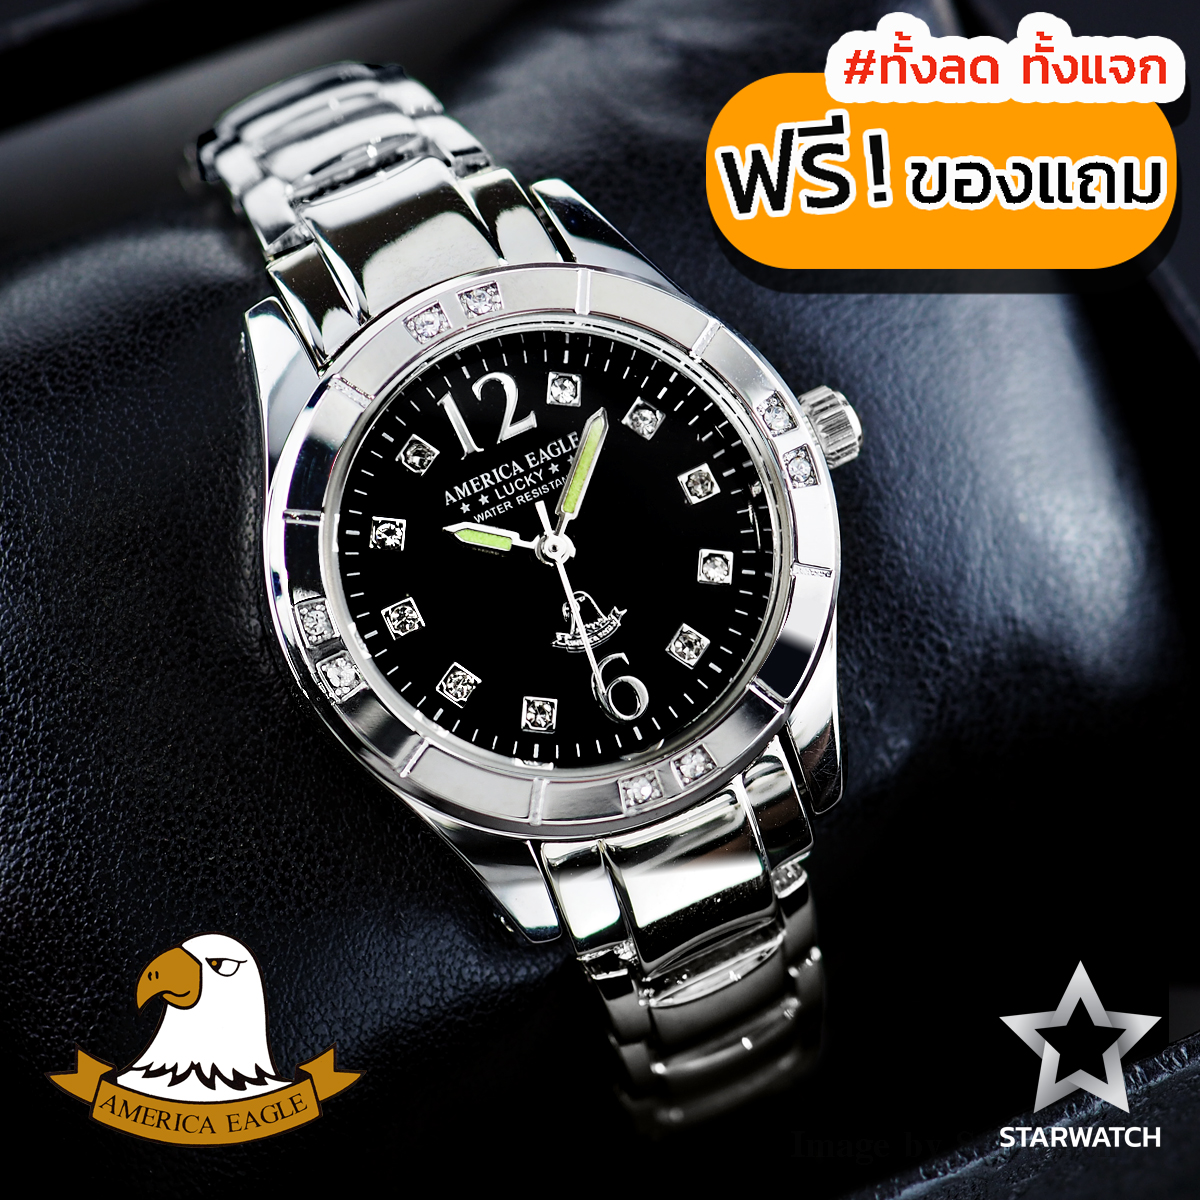 AMERICA EAGLE นาฬิกาข้อมือผู้หญิง สายสแตนเลส รุ่น AE013L - Silver/Black